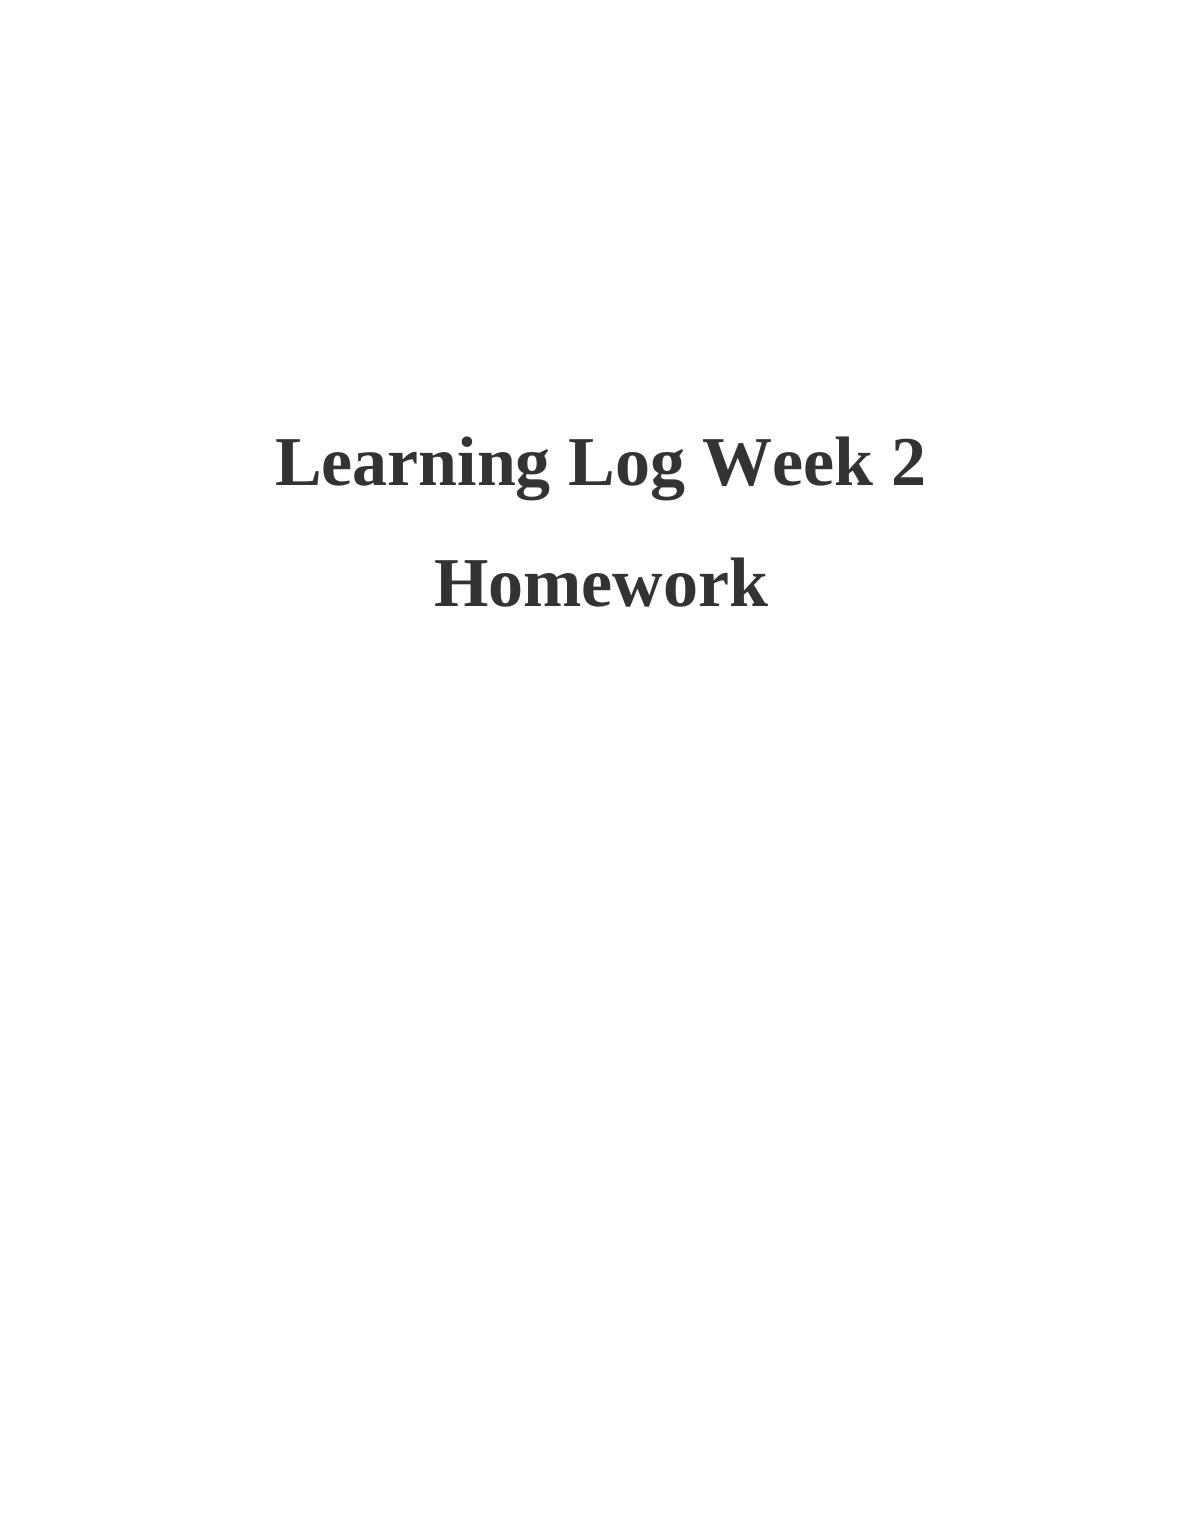 Learning Log Week 2 Homework_1